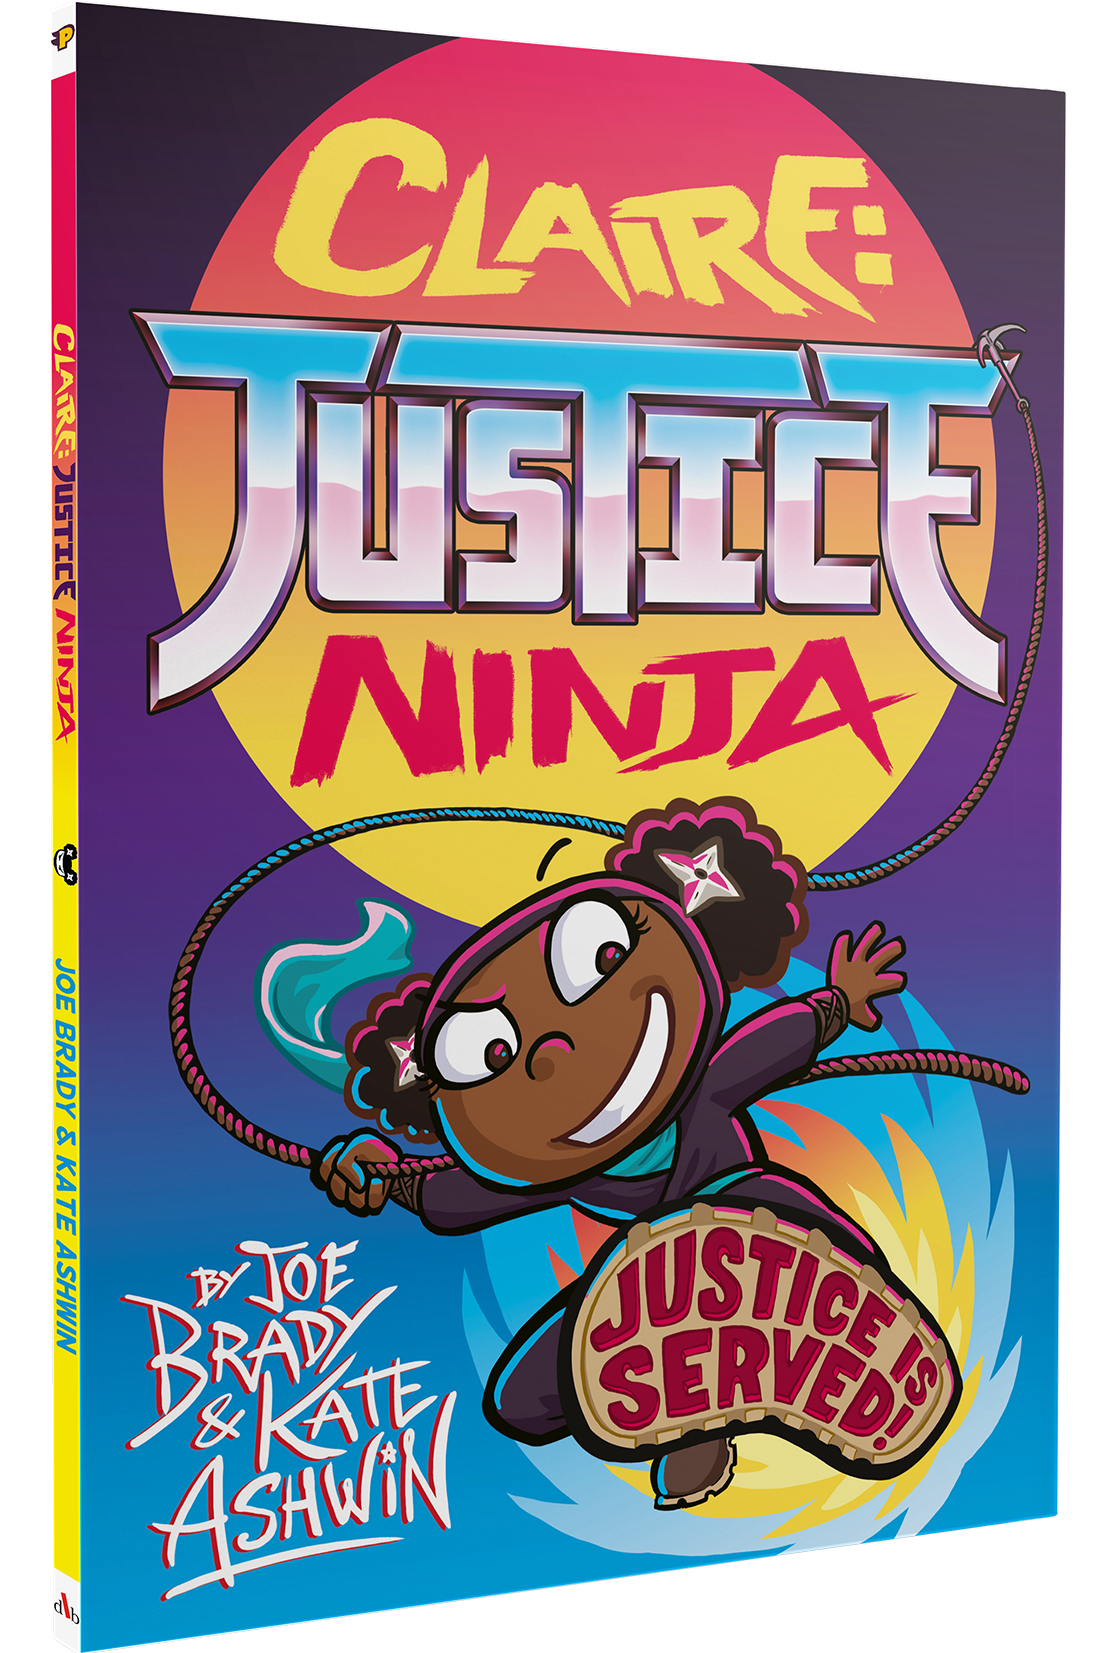 Claire: Justice Ninja